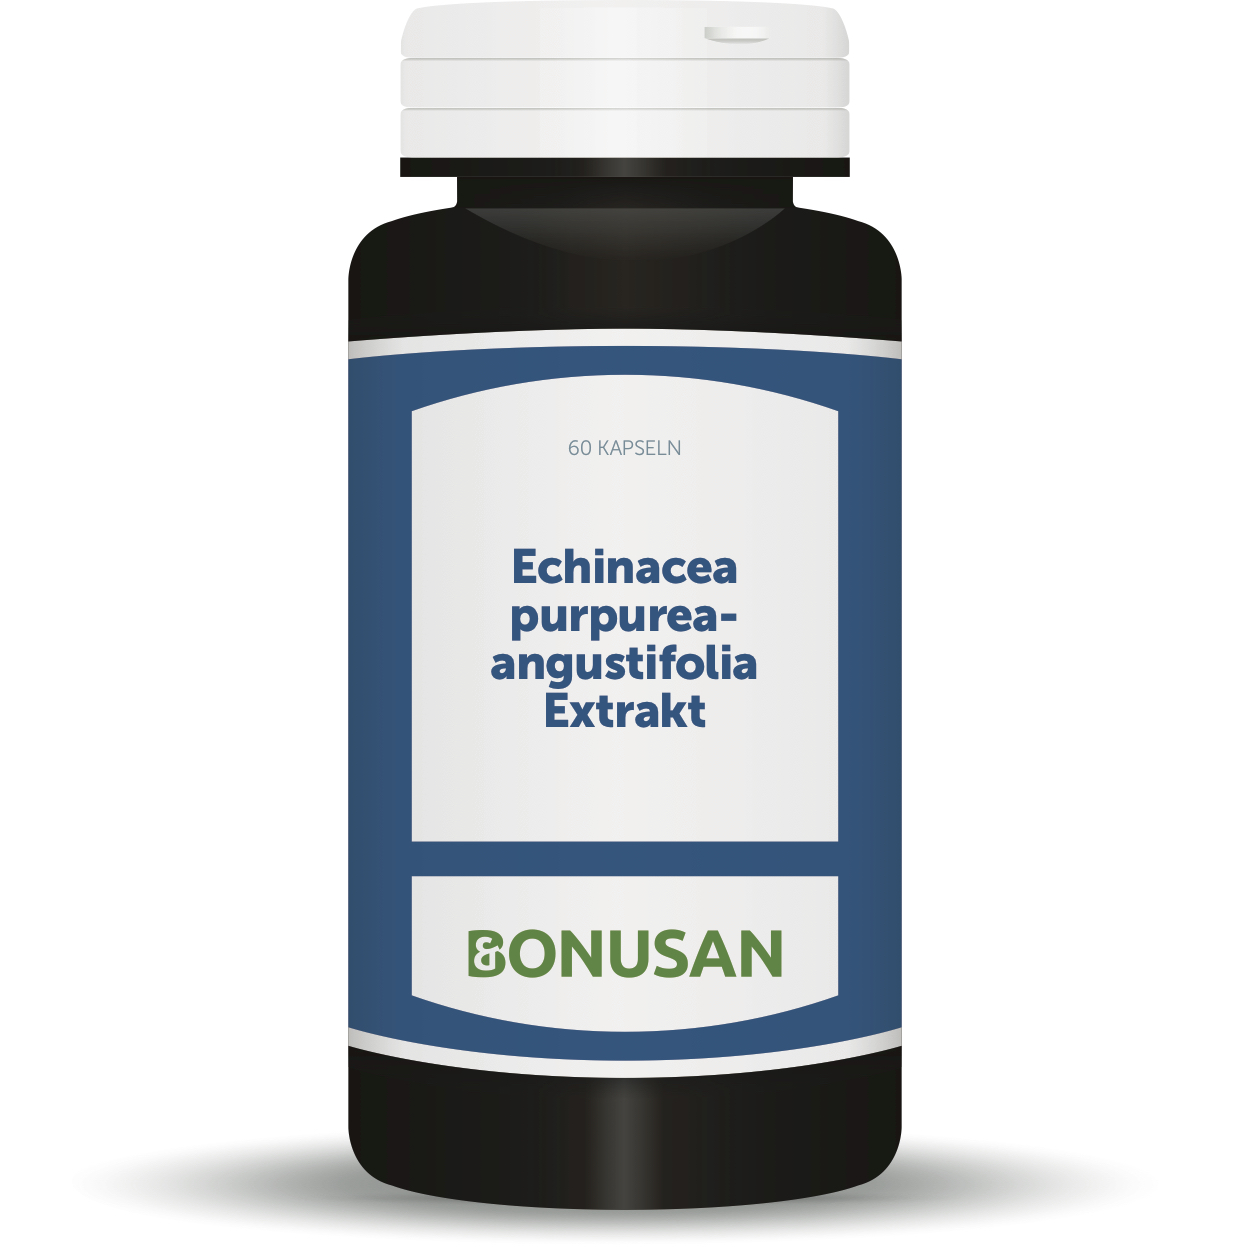 Echinacea purpurea angustifolia Extrakt